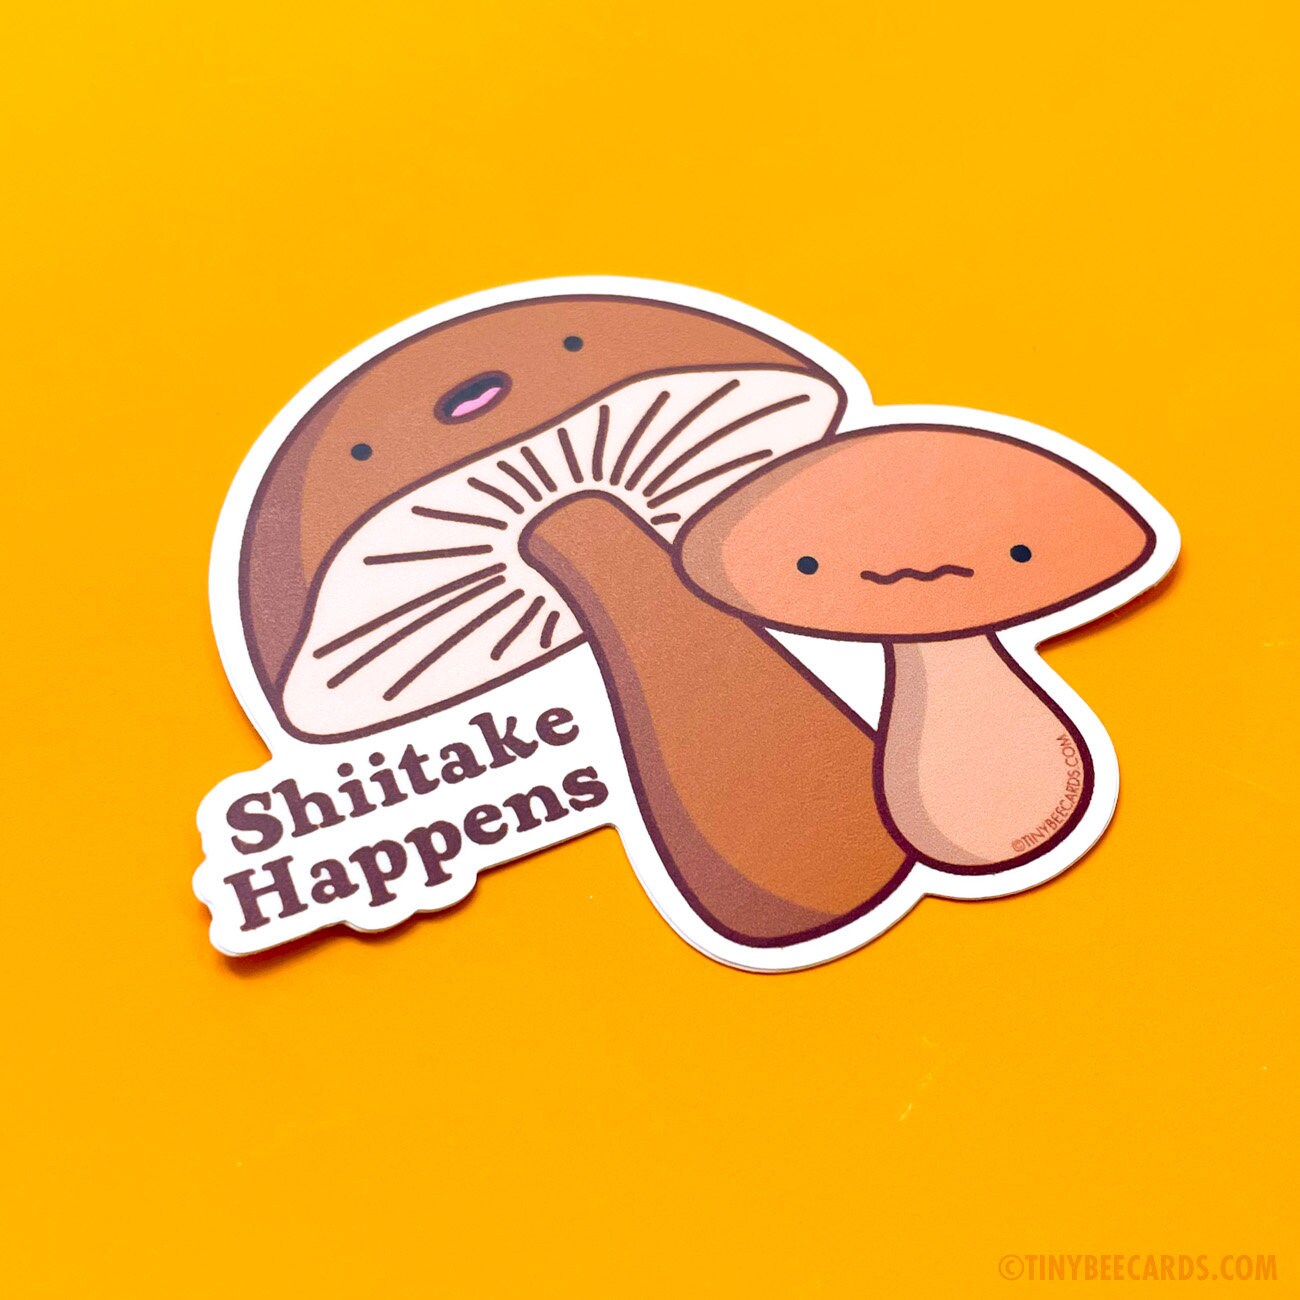 Shitake Happens Funny Mushroom Puns  Poster for Sale by punnybone